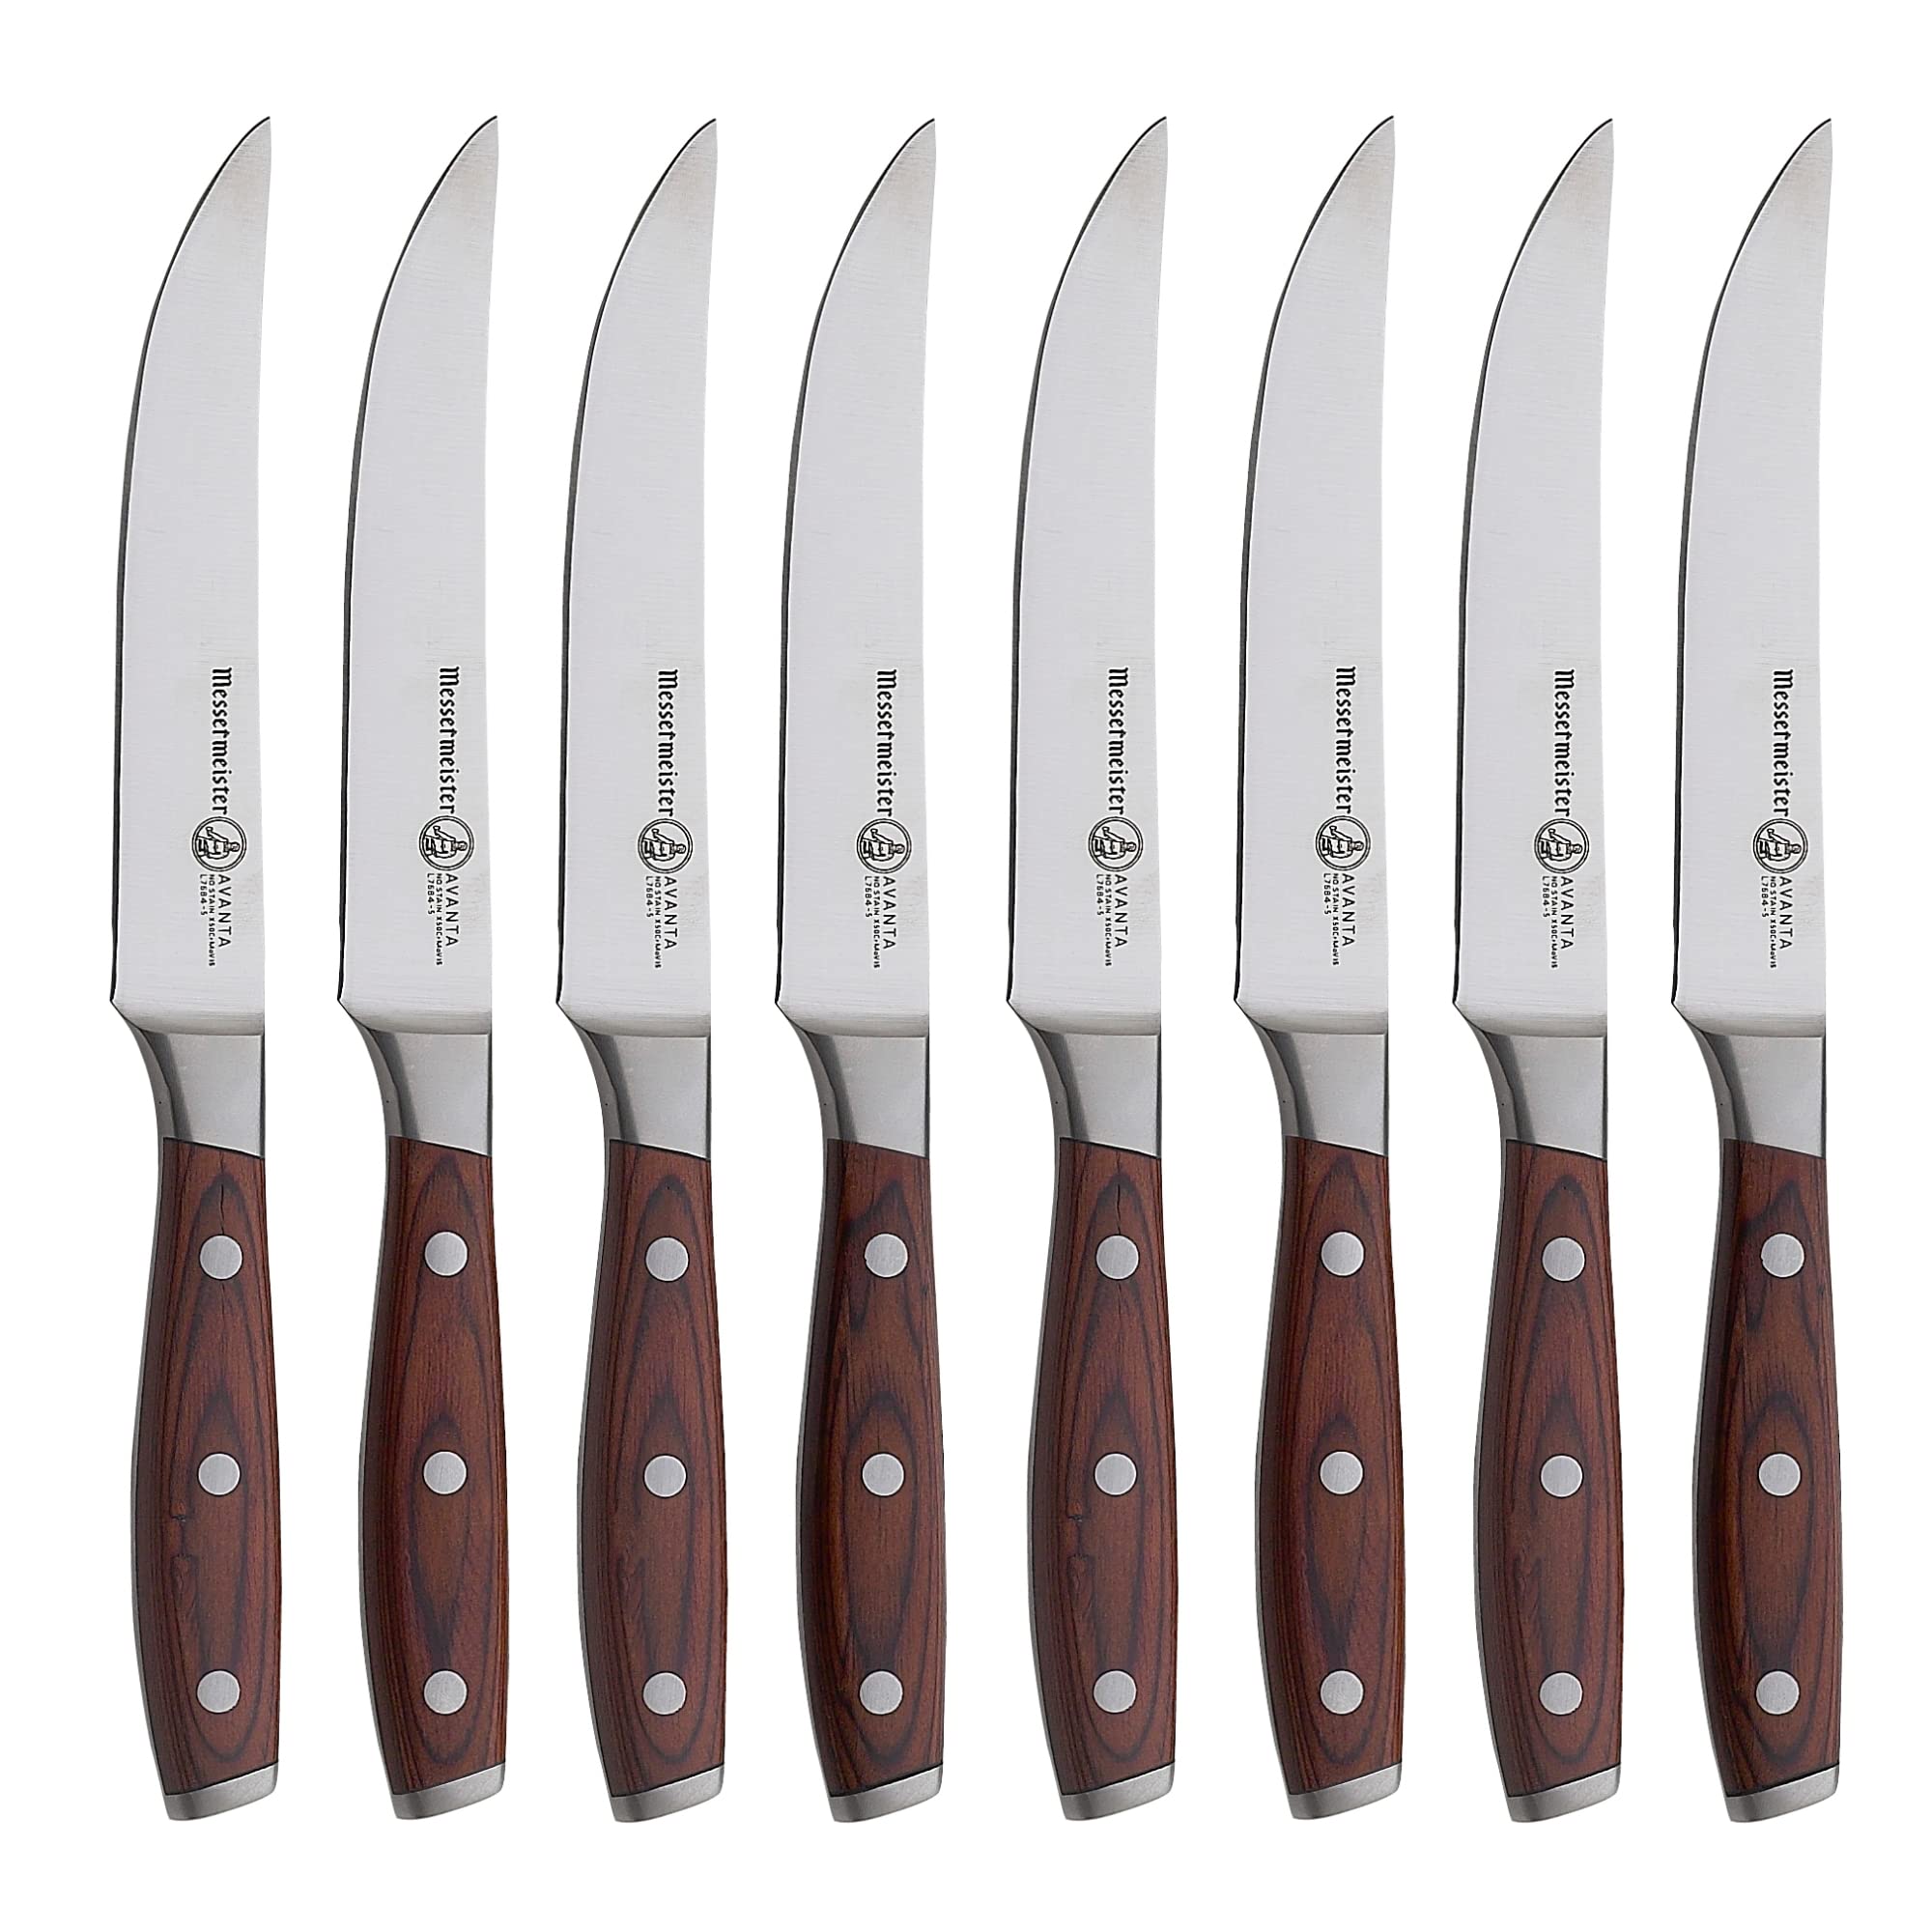 recommerce via Amazon - Messermeister Avanta 5” Fine Edge Steak Knife Set of 8 $59.95